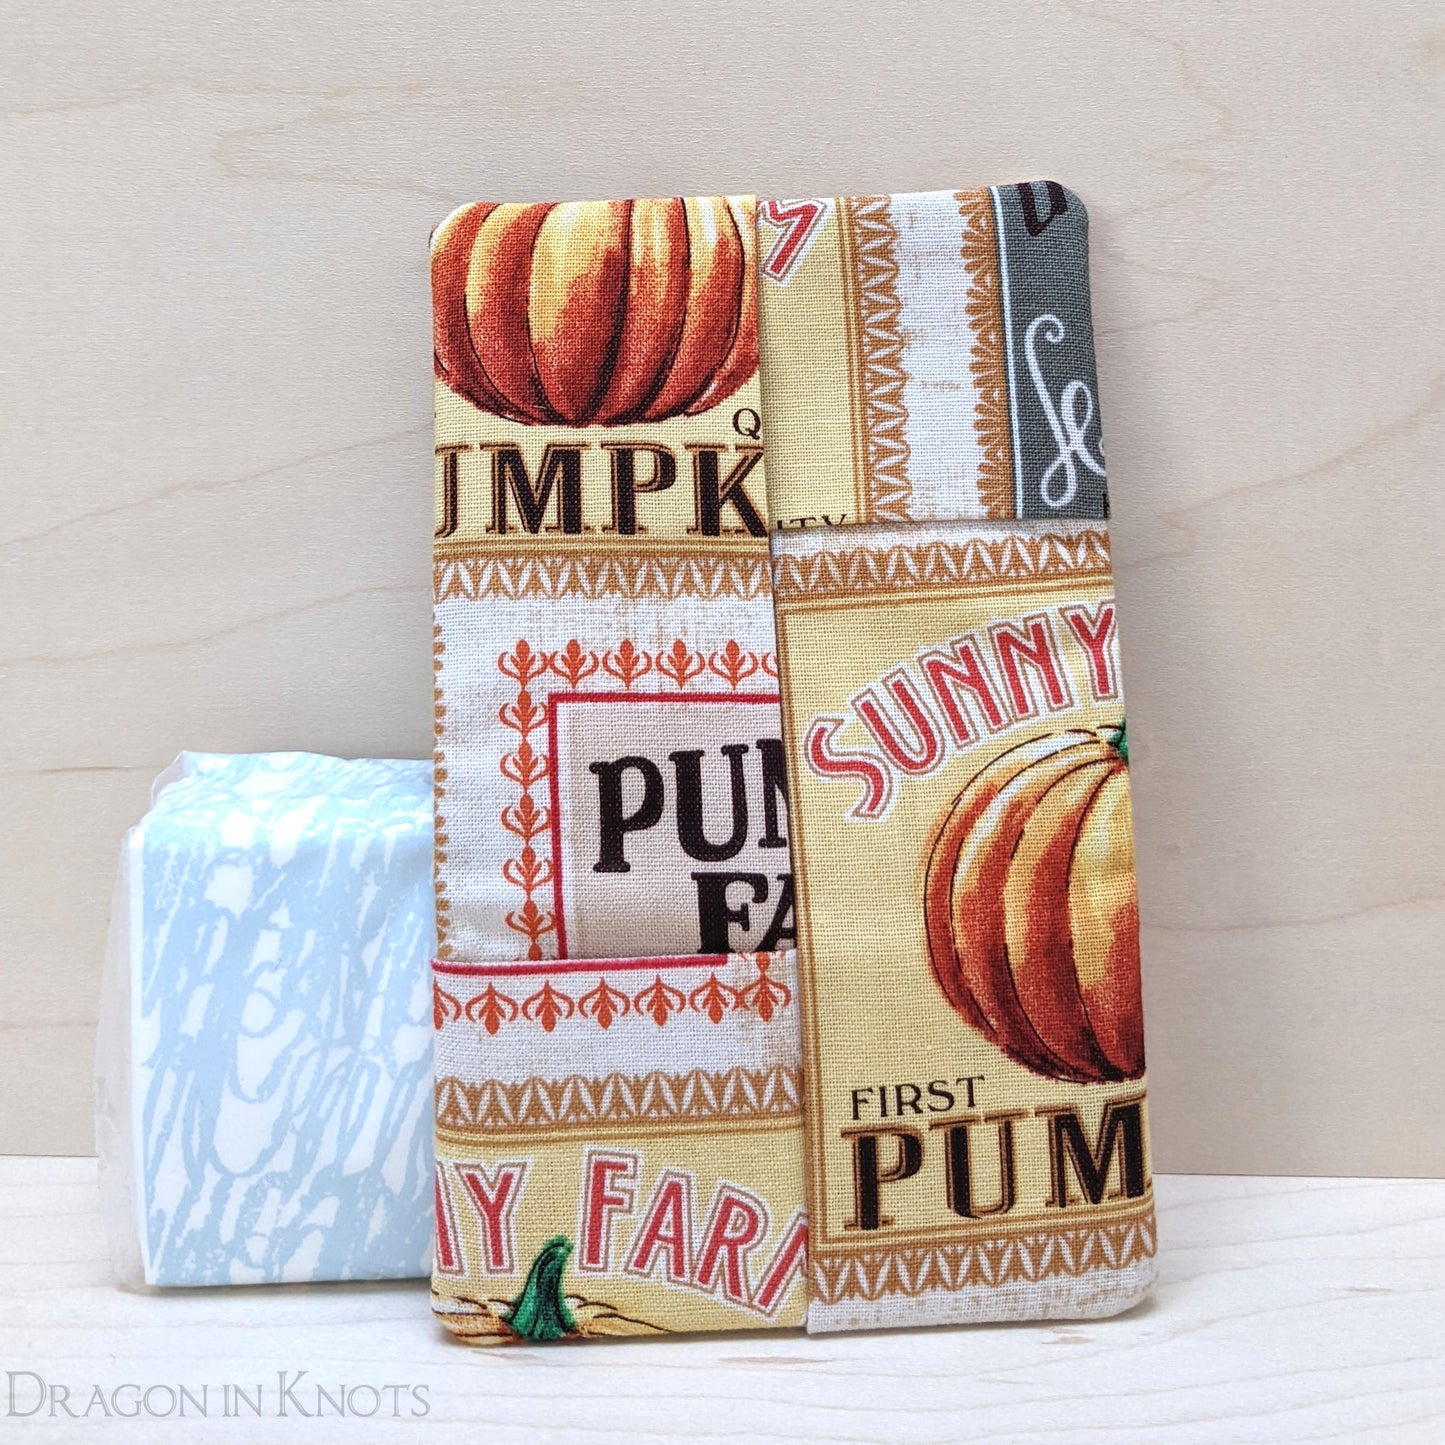 Pumpkin Farm Pocket Tissue Cover - Dragon in Knots handmade